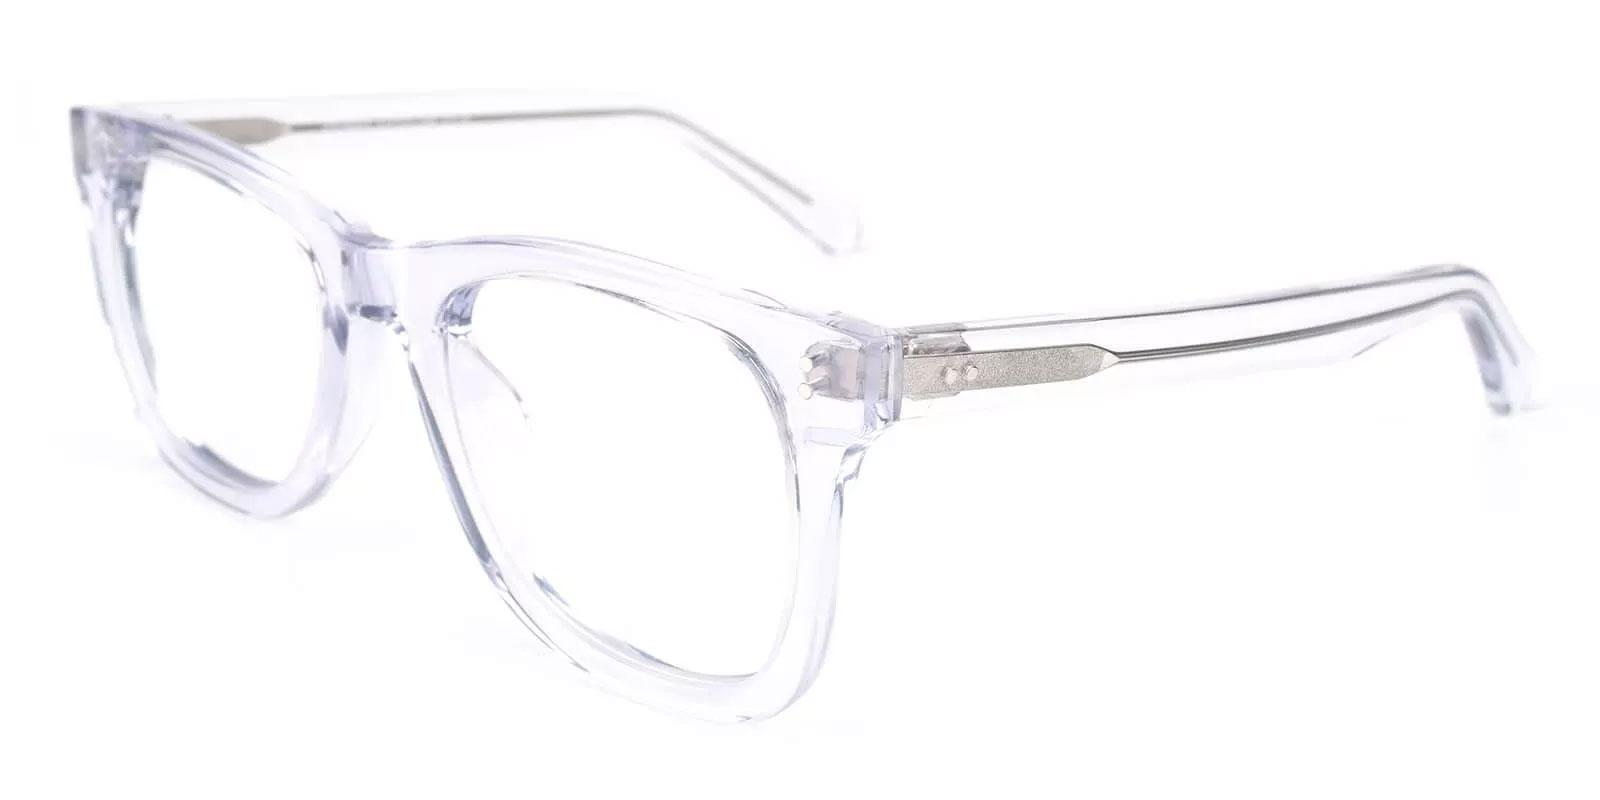 Dean Translucent Acetate Eyeglasses , UniversalBridgeFit Frames from ABBE Glasses